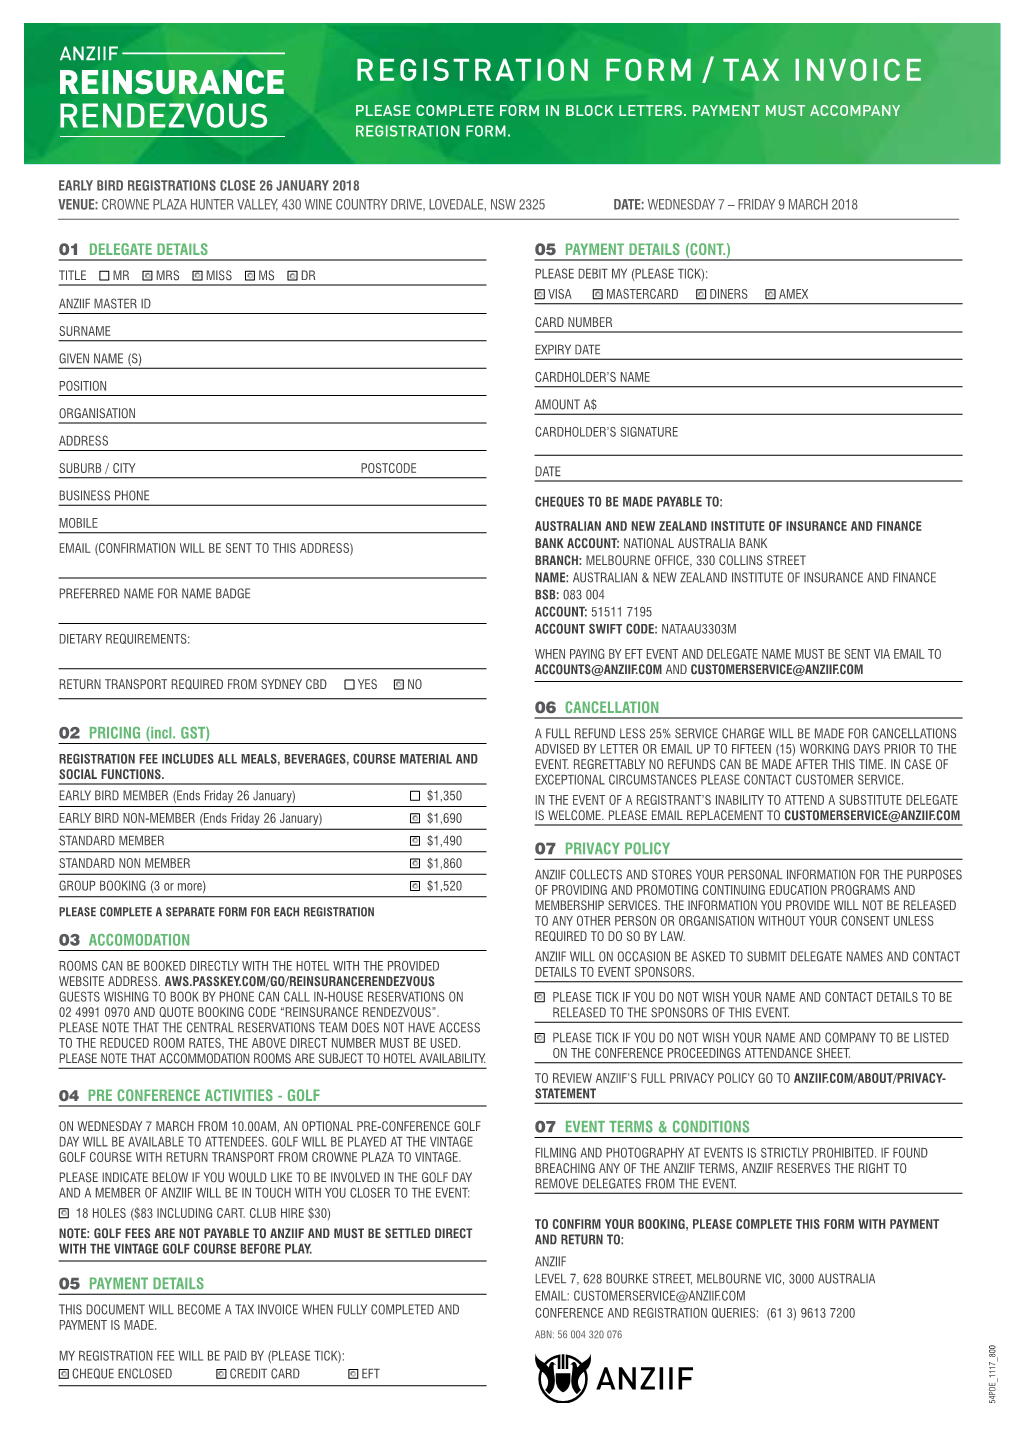 Registration Form / Tax Invoice